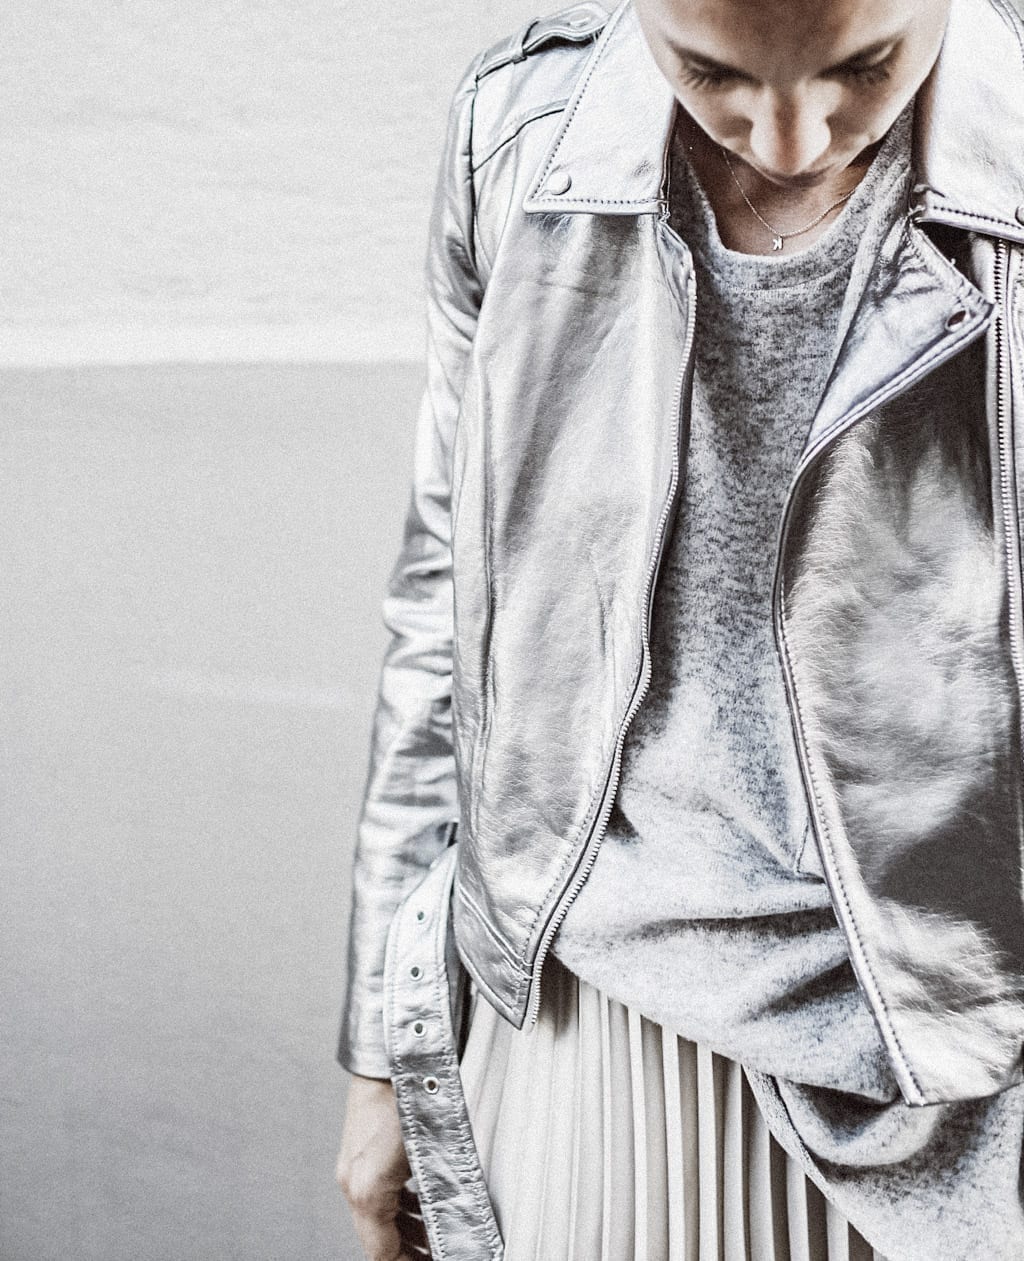 ck-constantlyk-com-karin-kaswurm-street-style-fashion-silver-leather-jacket-plissee-6961